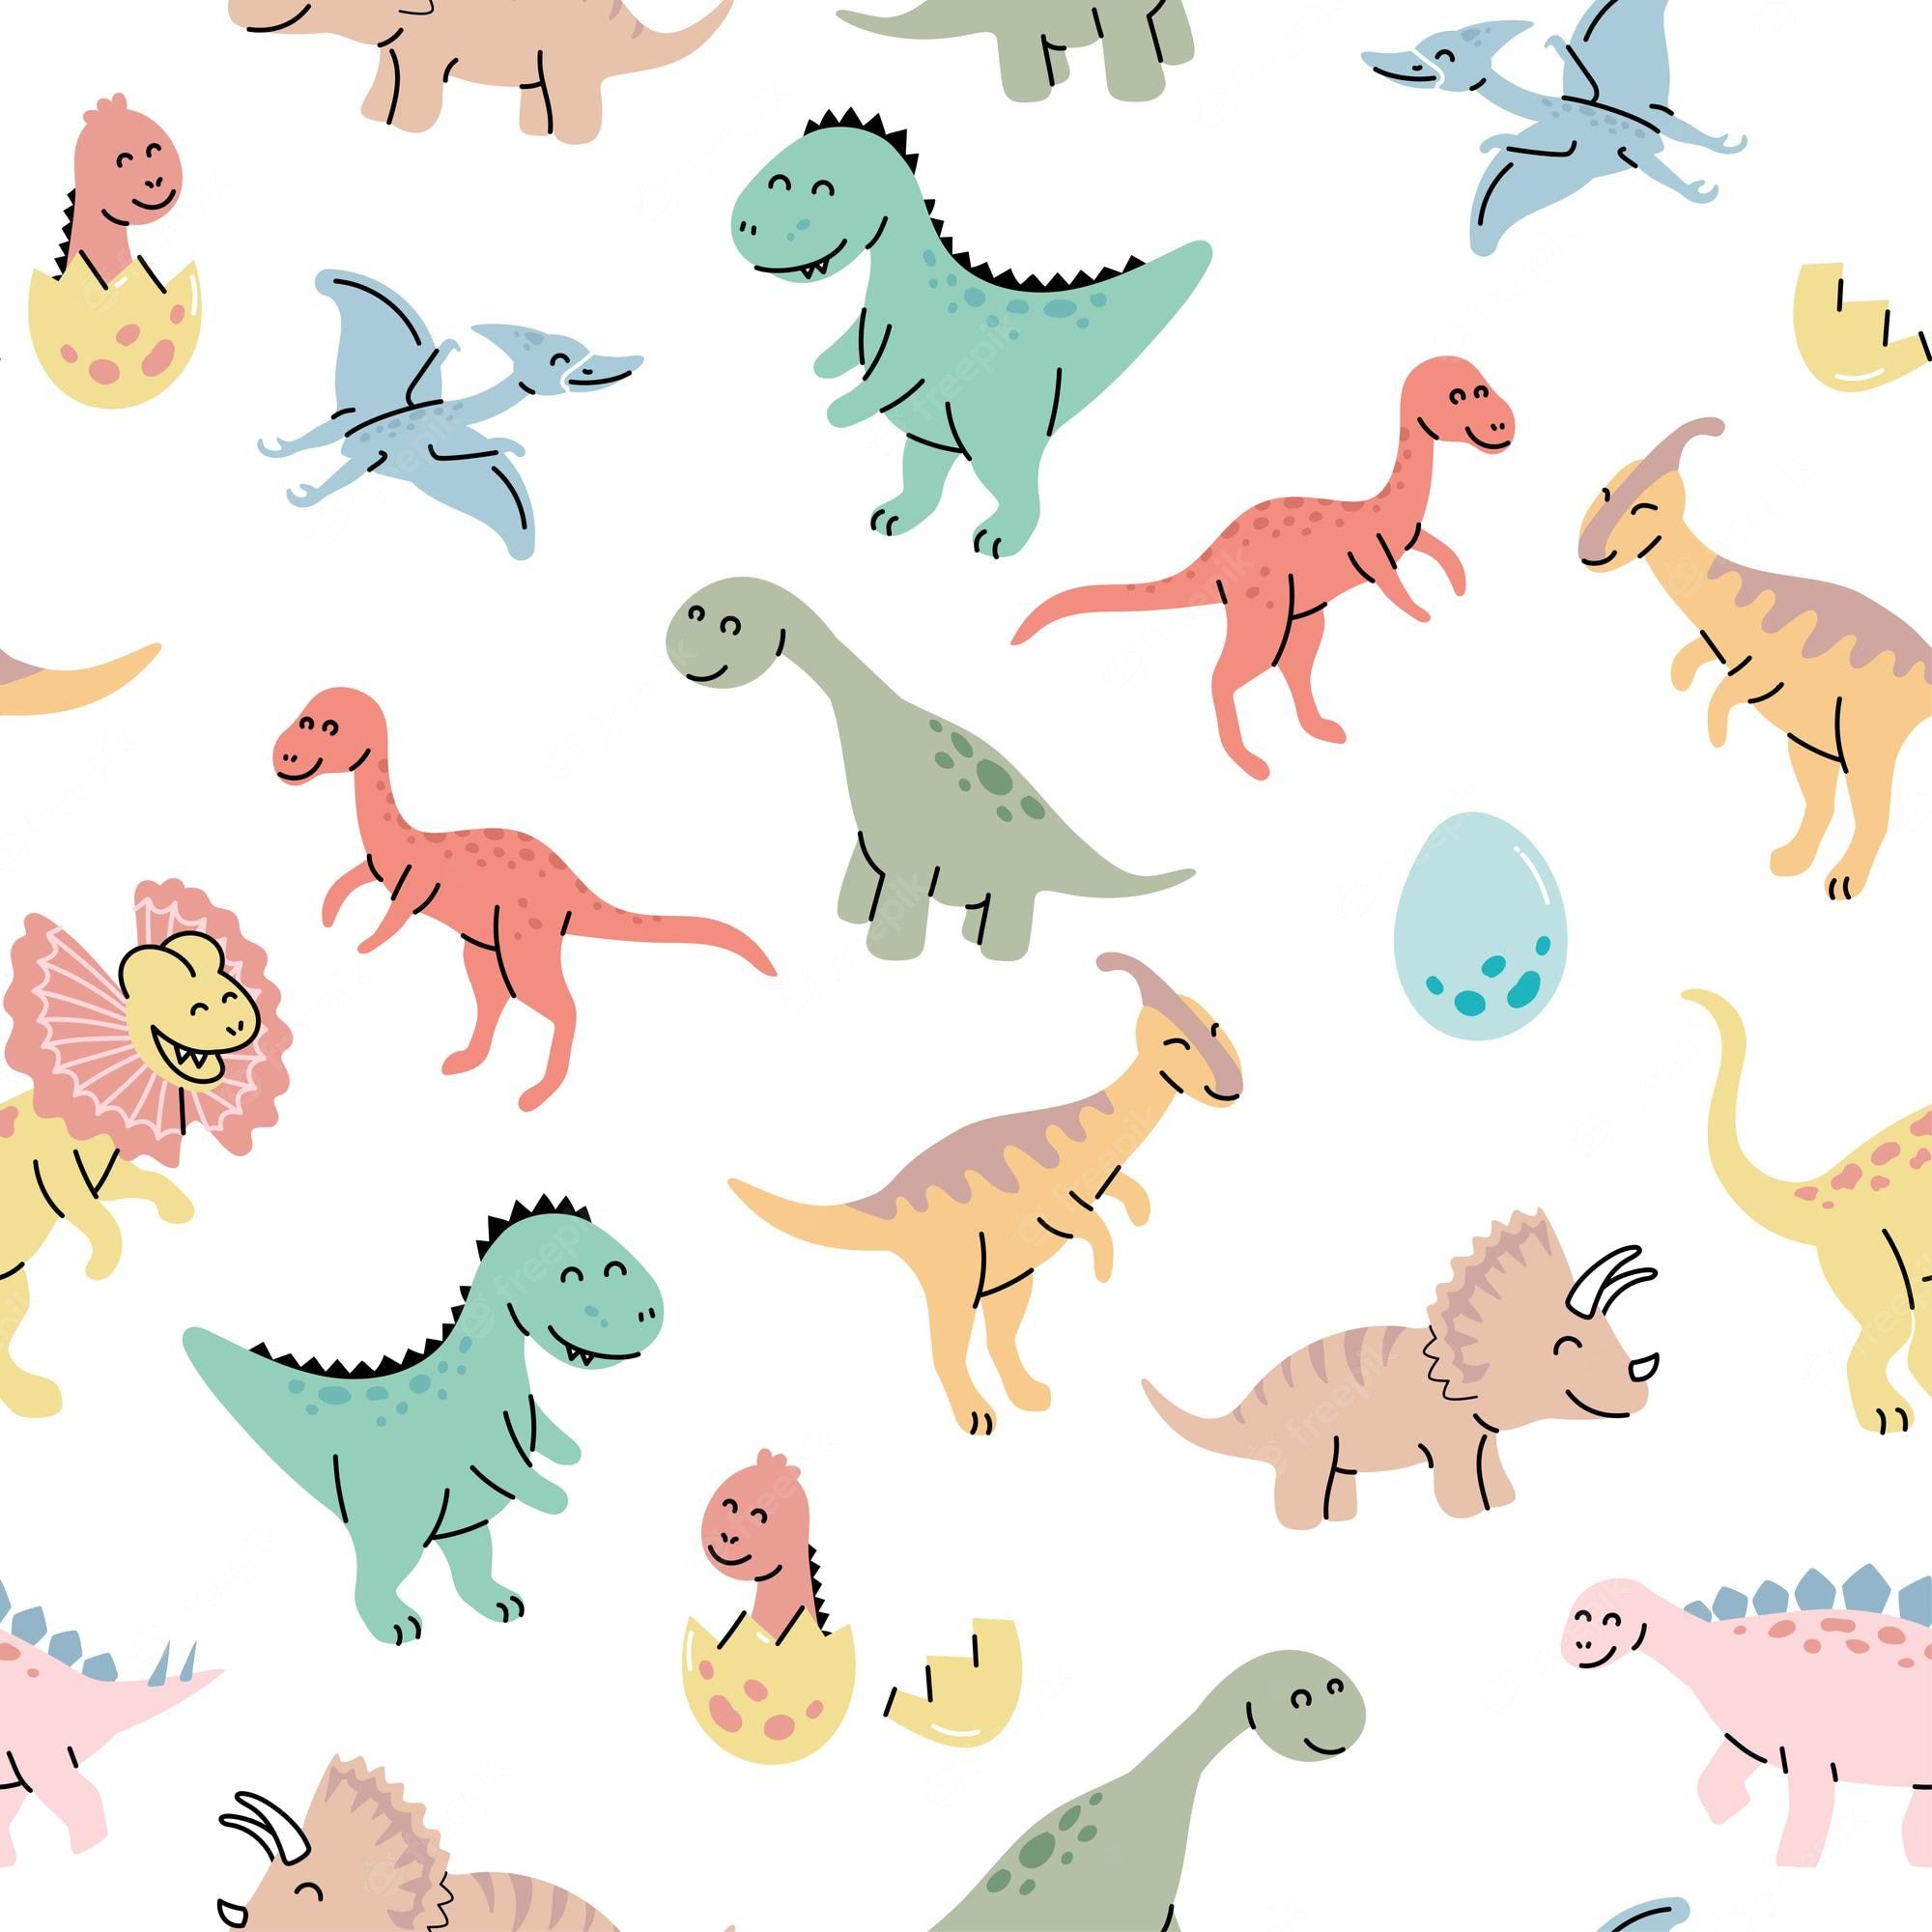 Dino wallpaper Vectors & Illustrations for Free Download